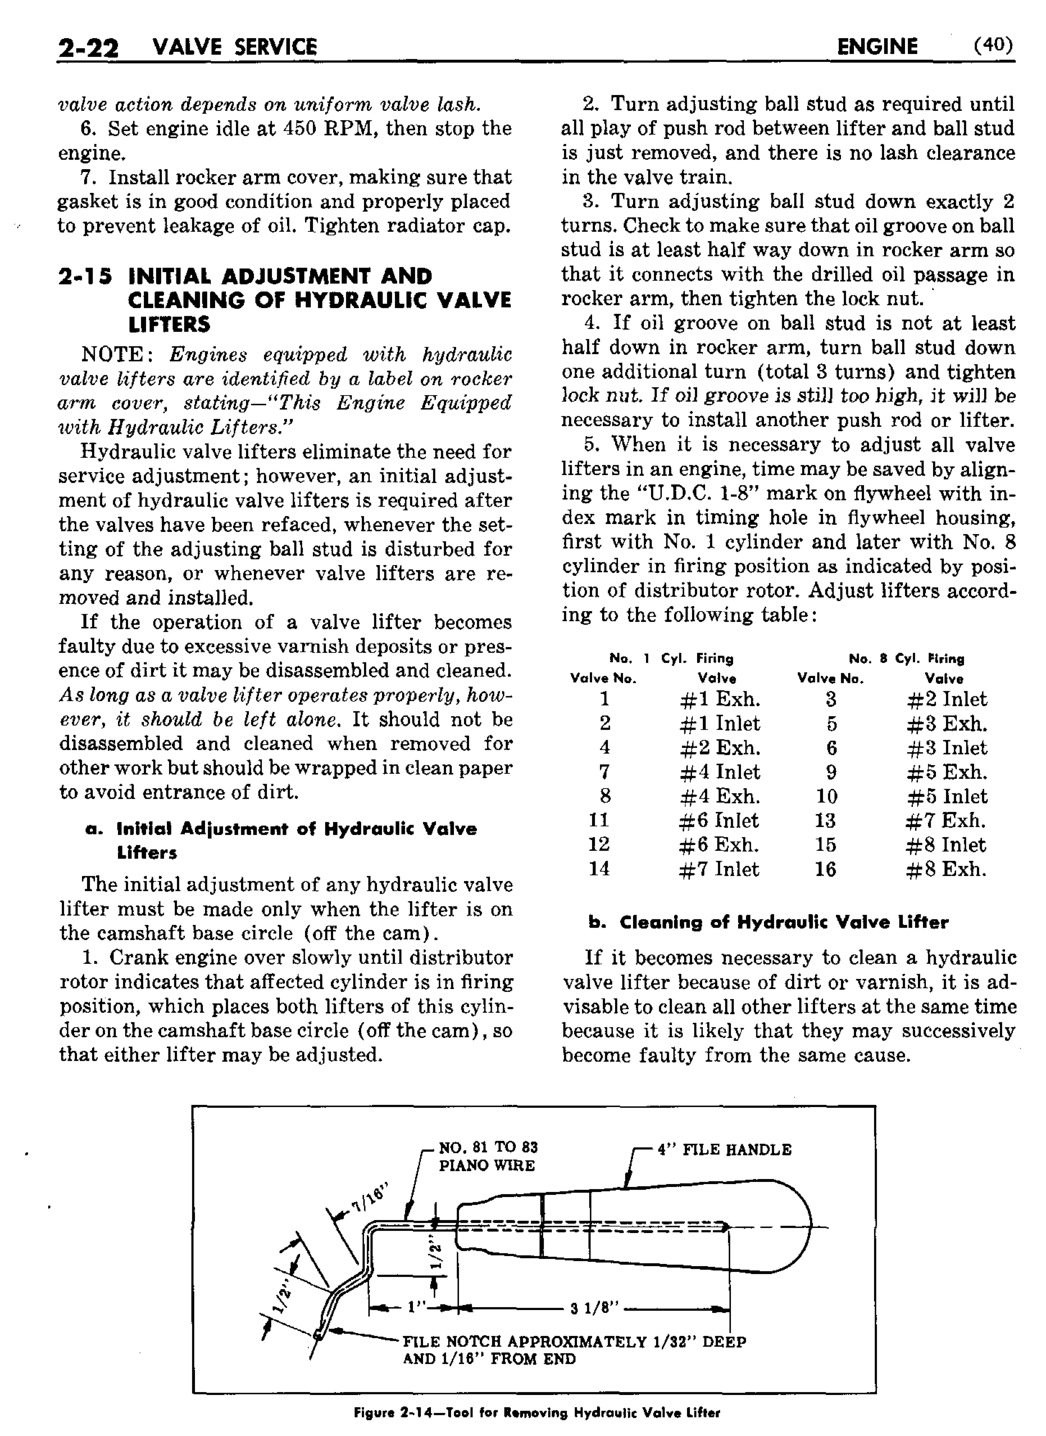 n_03 1950 Buick Shop Manual - Engine-022-022.jpg